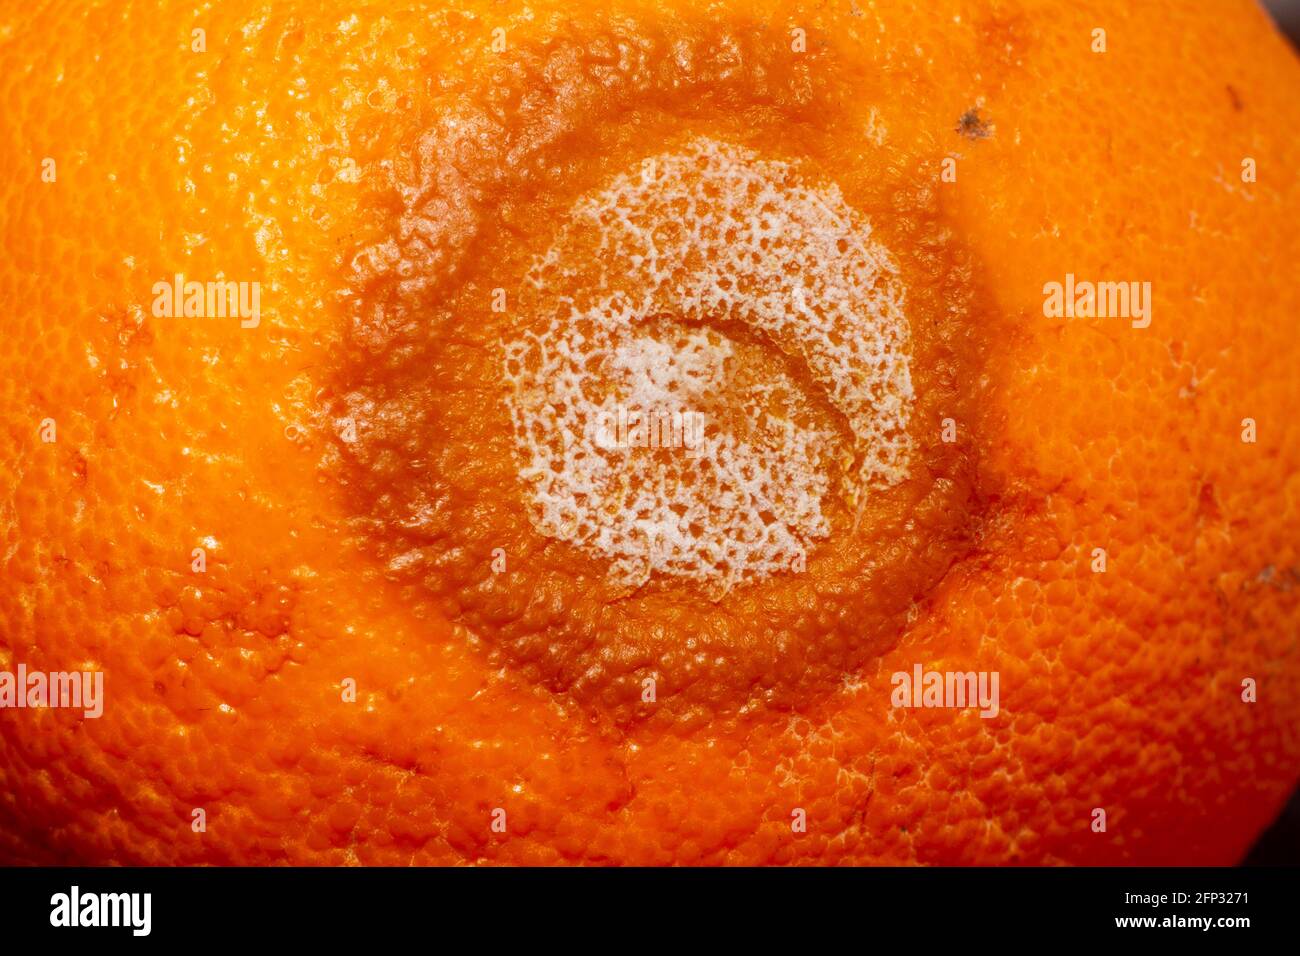 Moldy rotten orange isolated on wooden stock. extreme close up. Stock Photo